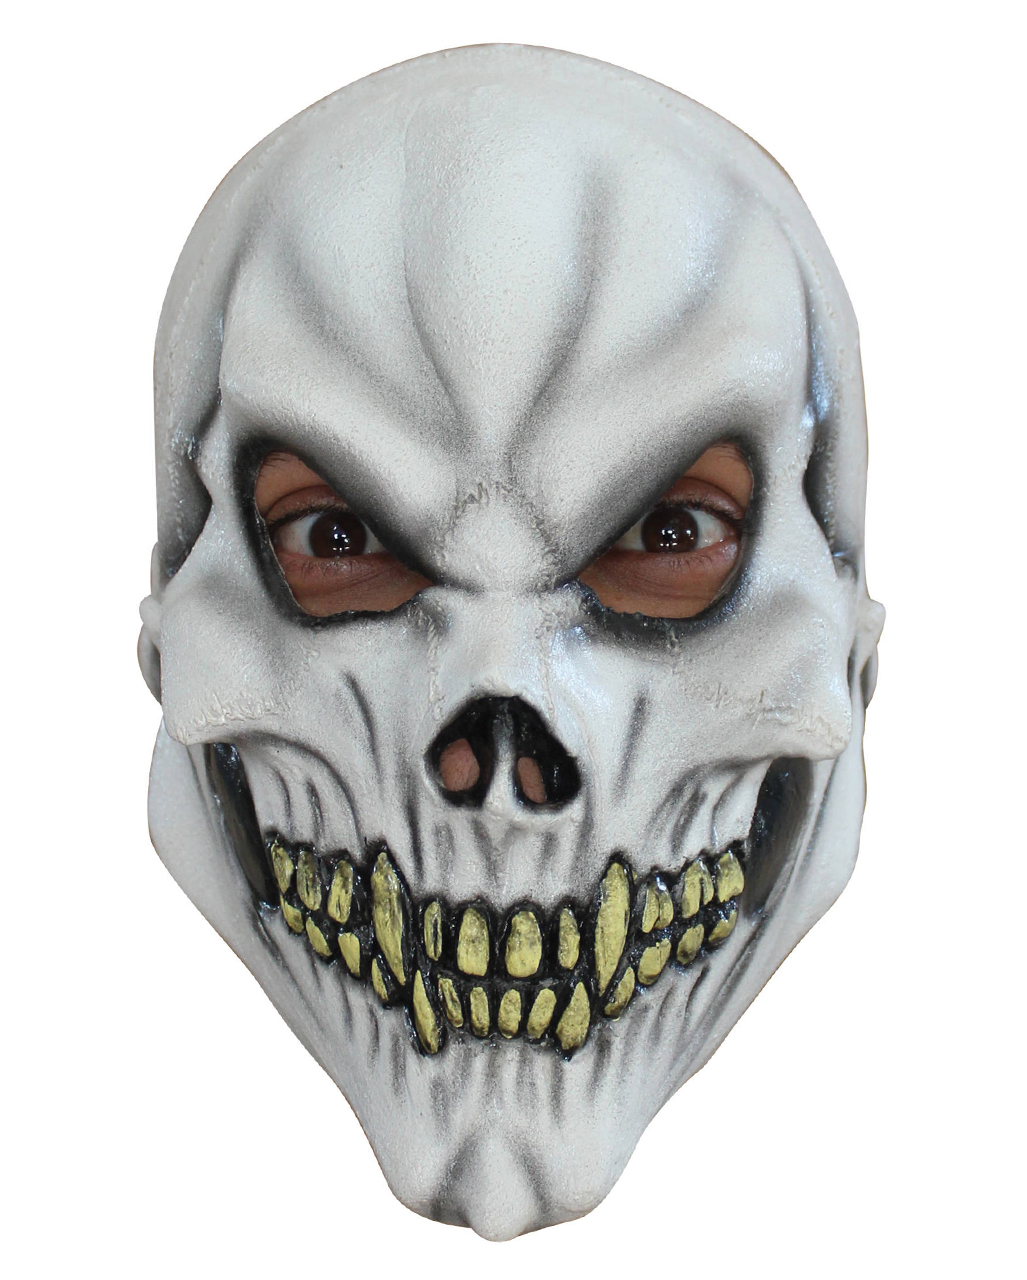 Creepy Scary Halloween Costume Mask Rubber Latex Skull Skeleton Mask 